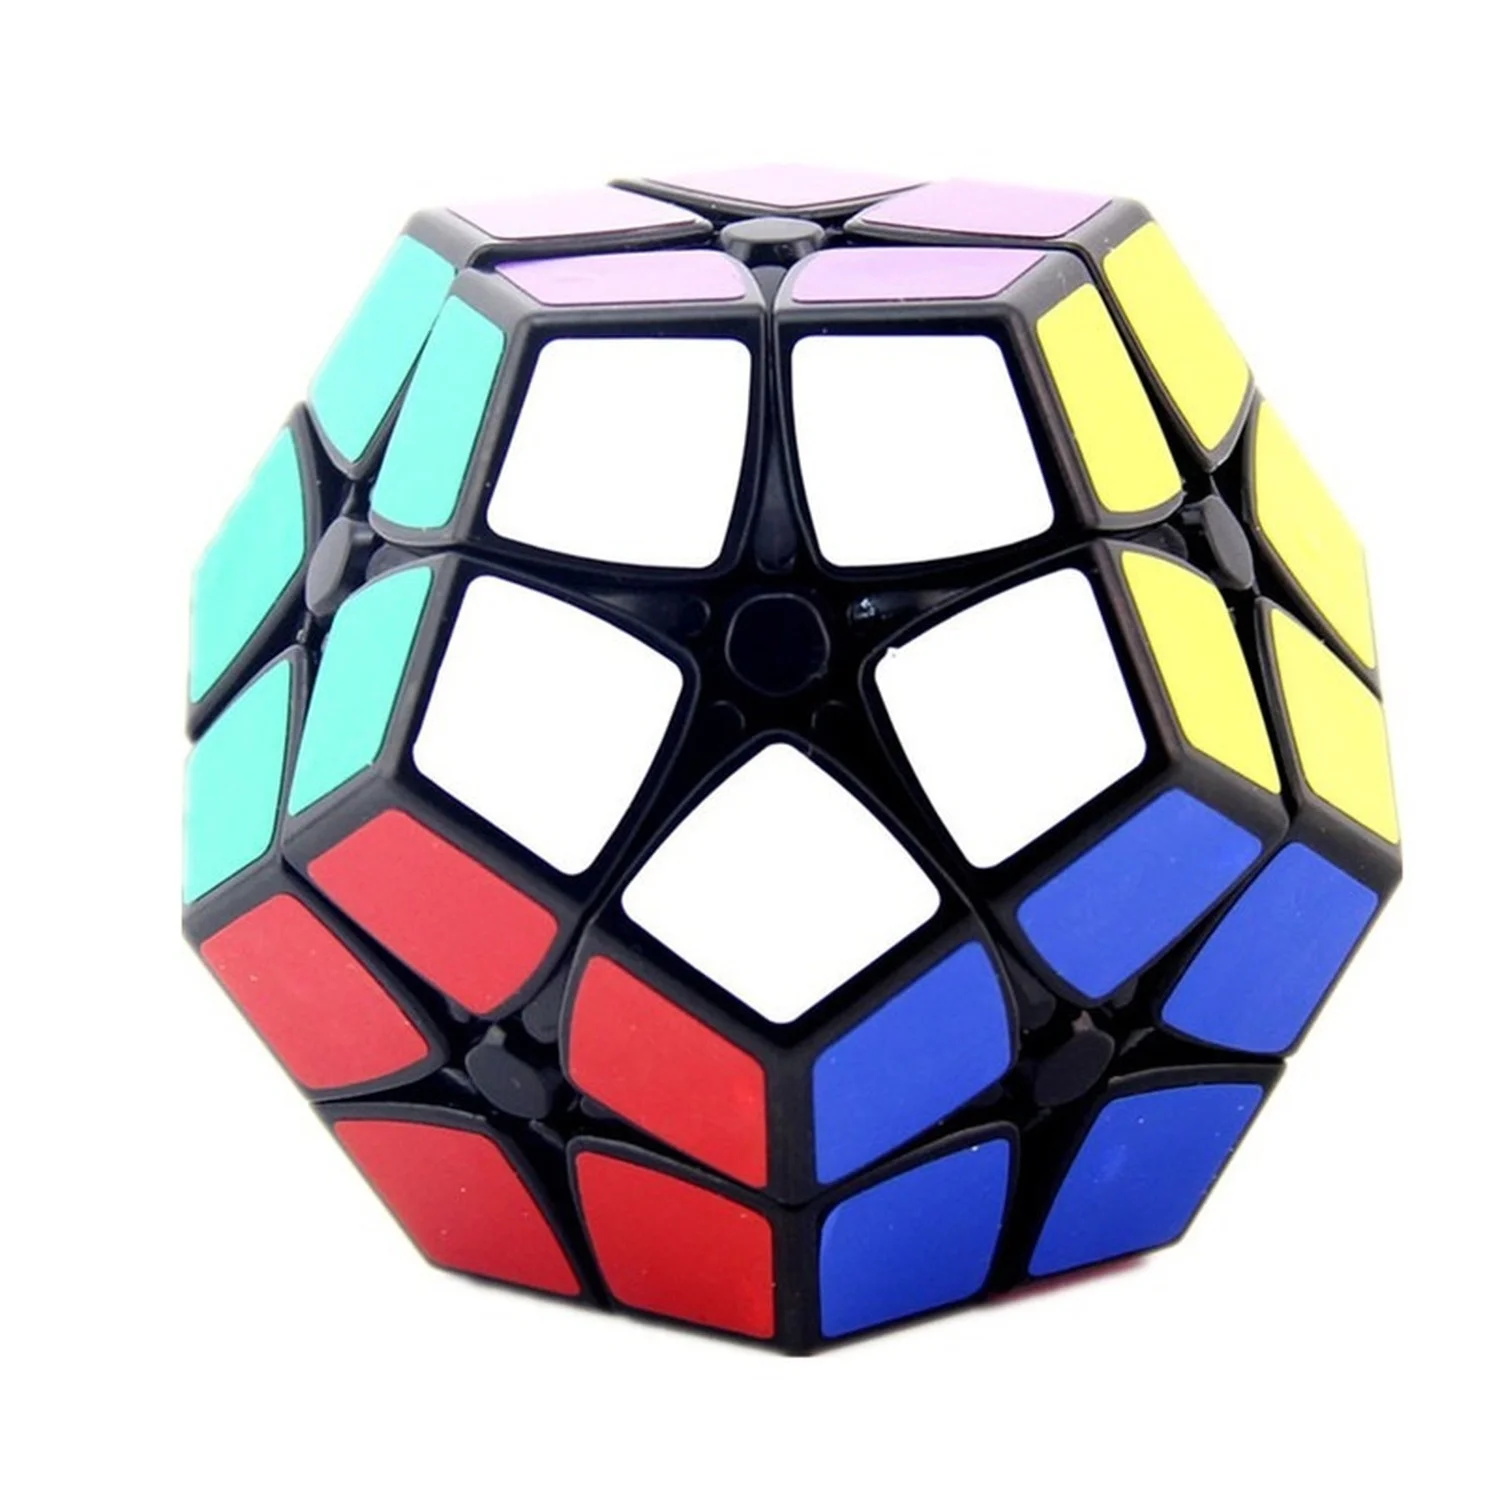 Shengshou-cubo de magia negra 2x2x2 Megaminxed, dodecaedro profesional, rompecabezas Twist, juguetes educativos...